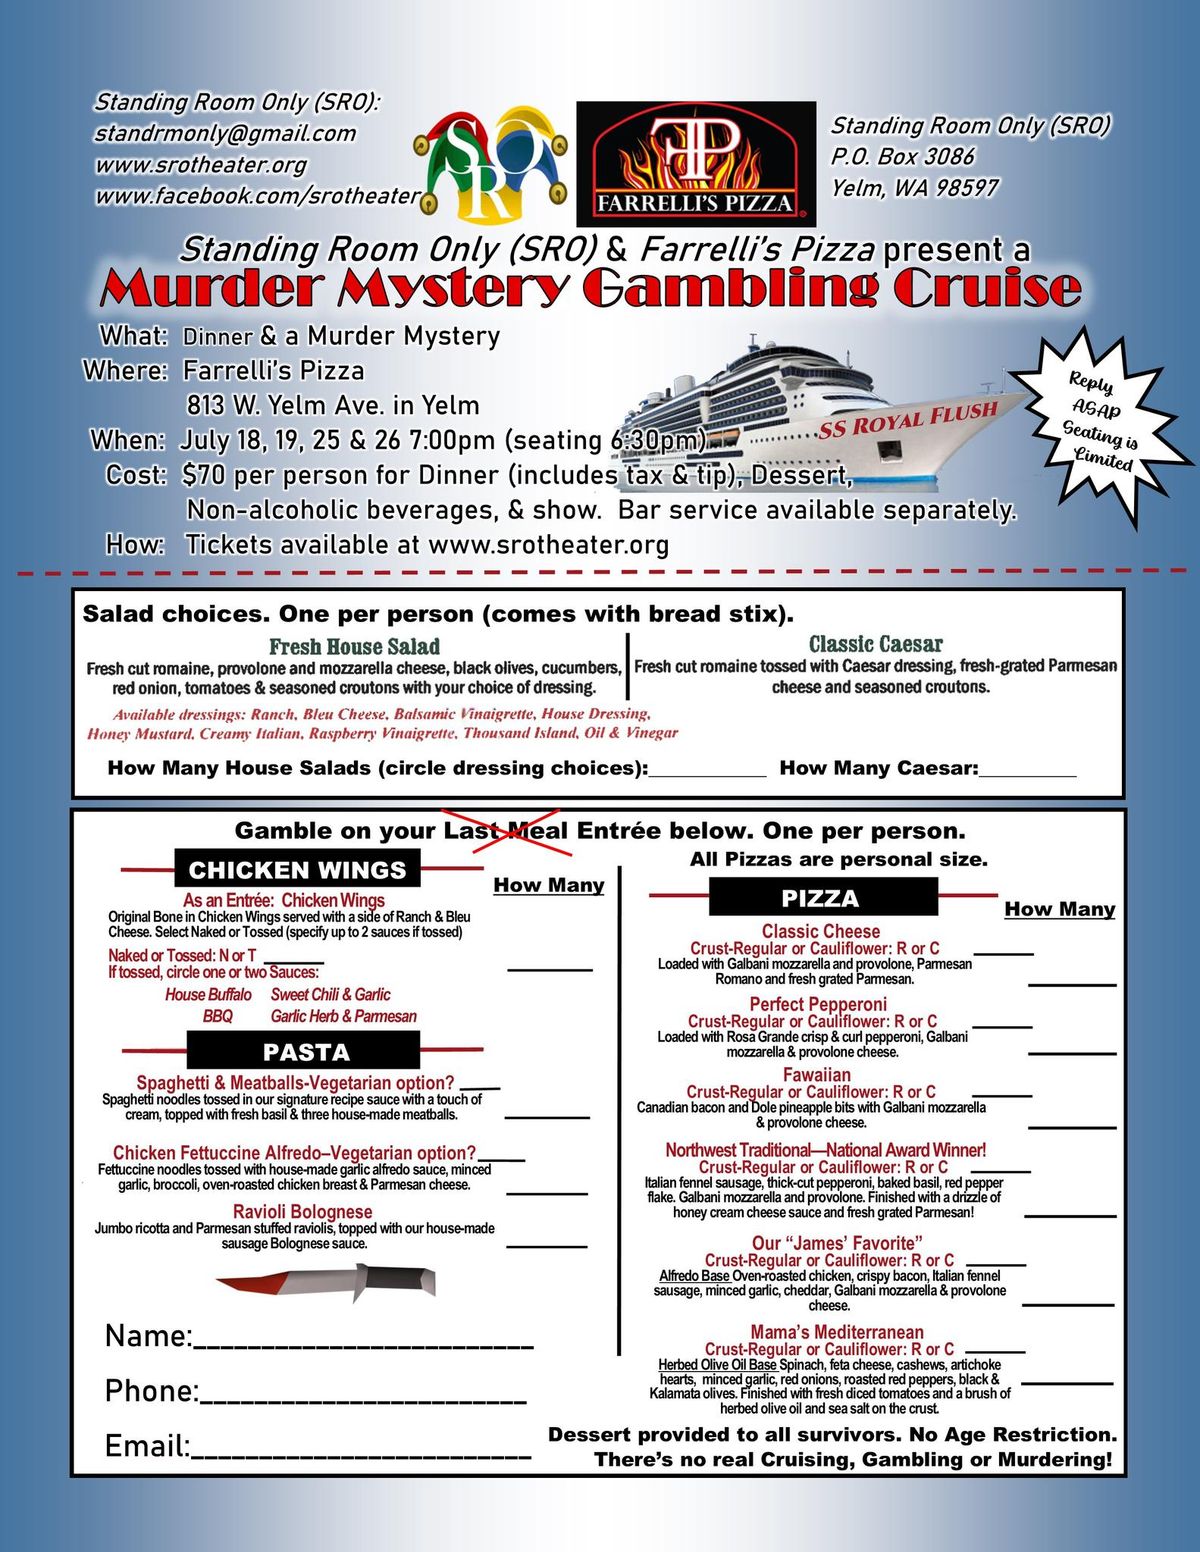 Murder Mystery Gambling Cruise